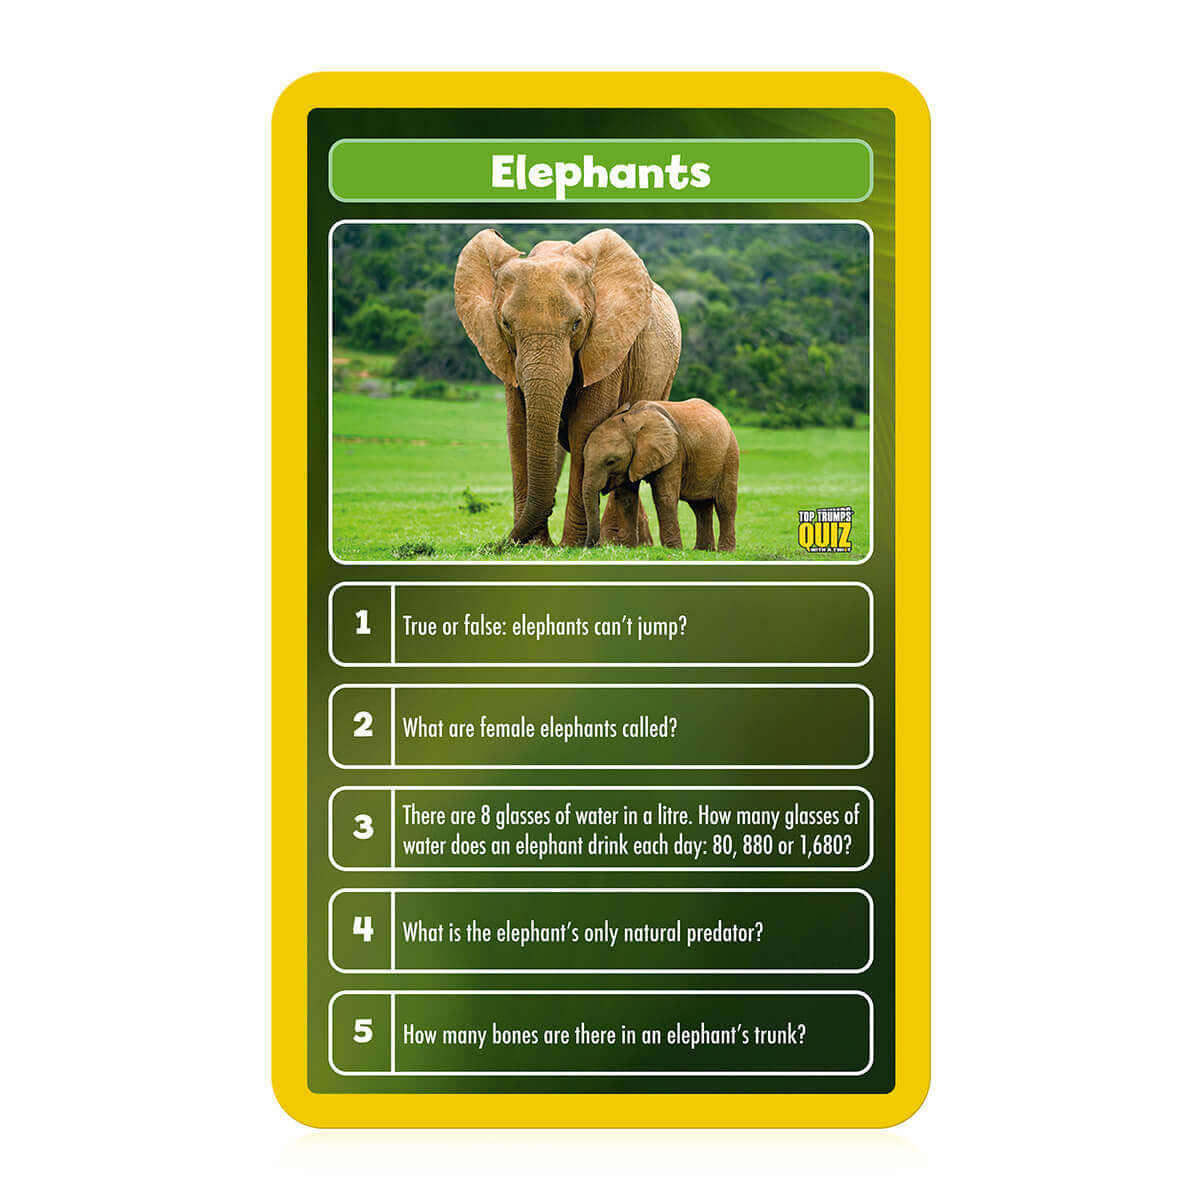 Animals Top Trumps Quiz Card Game